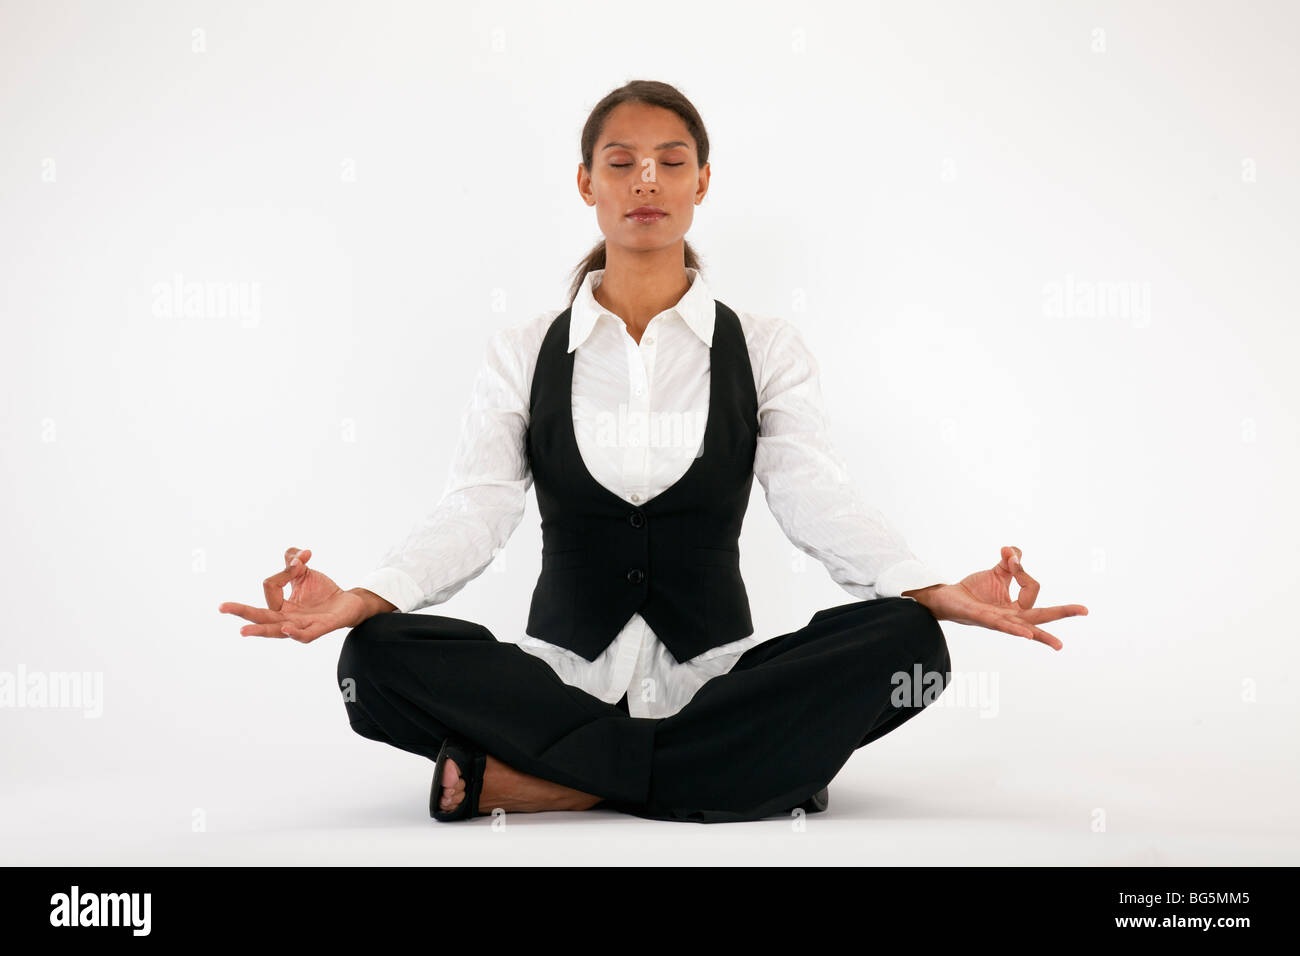 Young woman sitting cross legged and meditating. Horizontally framed shot. Stock Photo